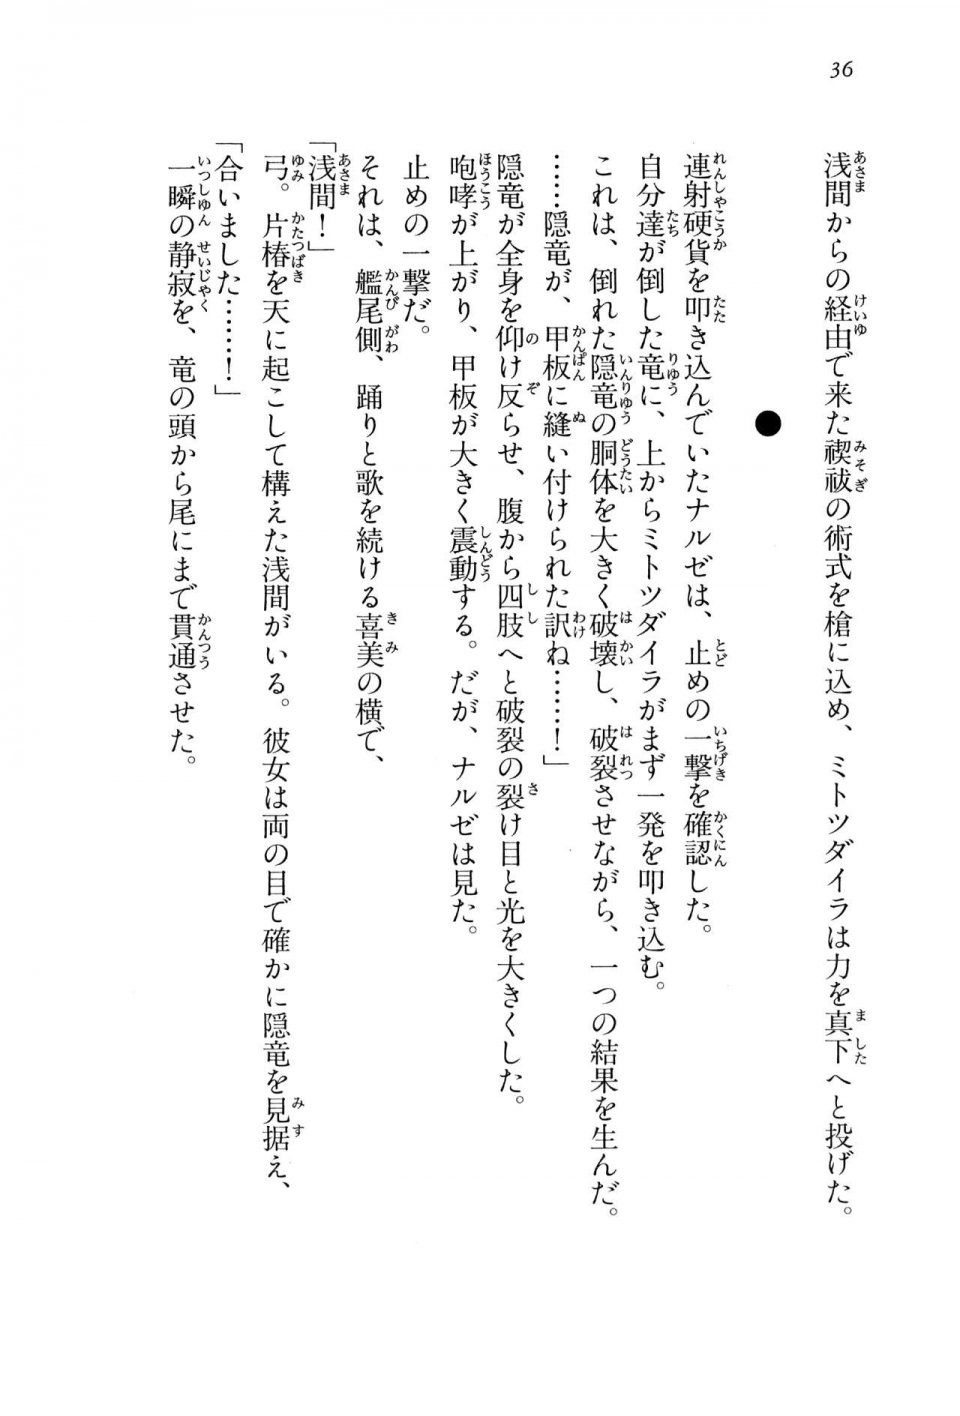 Kyoukai Senjou no Horizon BD Special Mininovel Vol 4(2B) - Photo #40